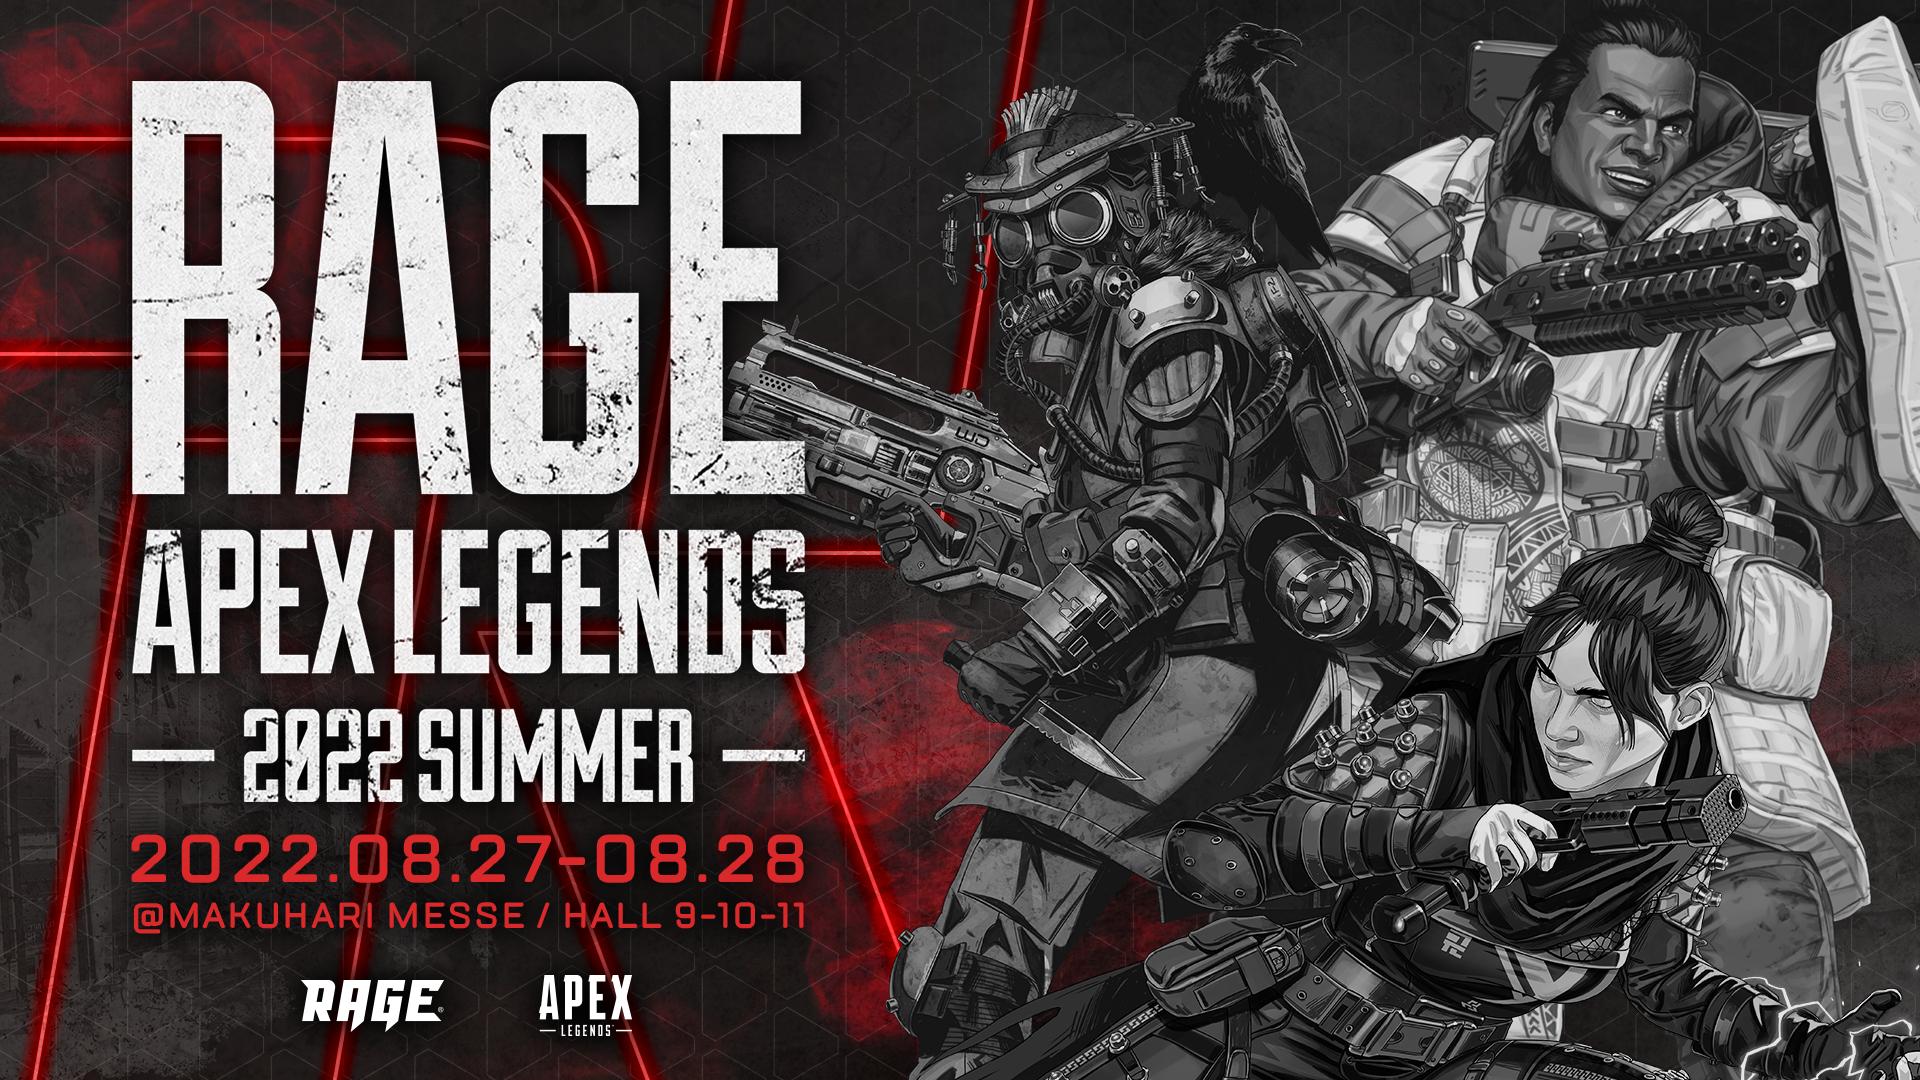 RAGE Apex Legends 2022 Summer feature image